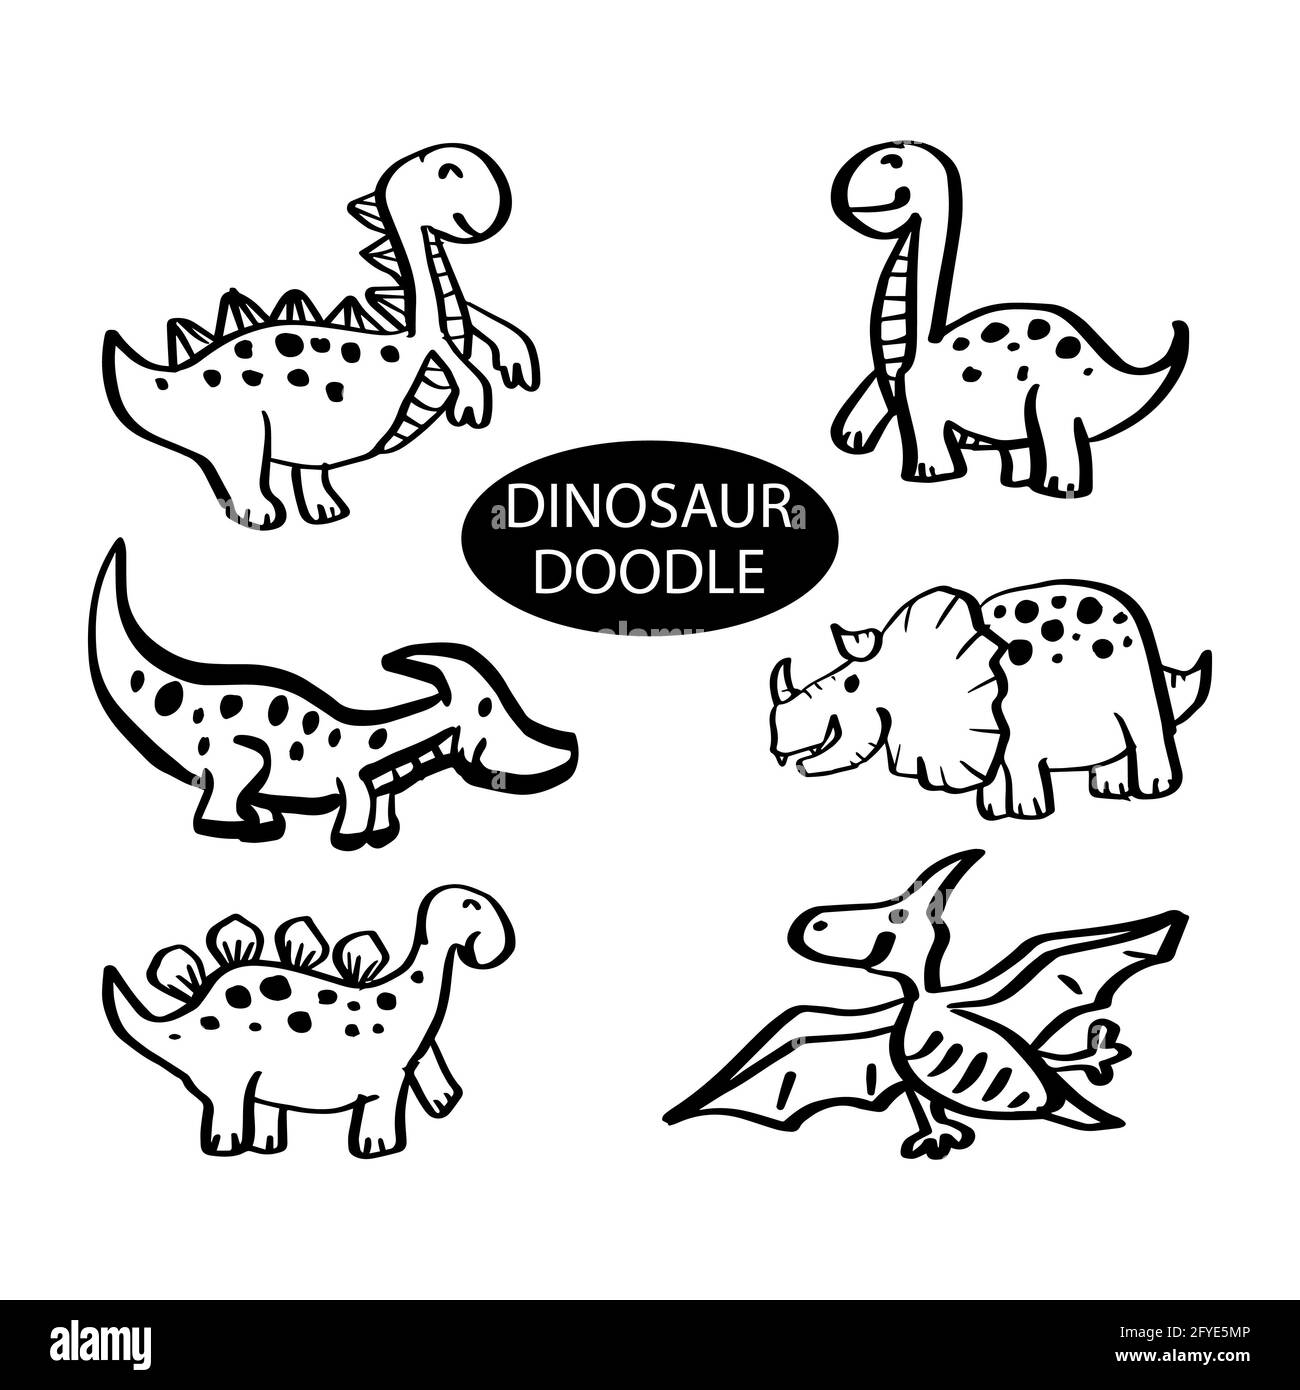 Hand drawn illustrations set of Dinosaur. Stock Photo